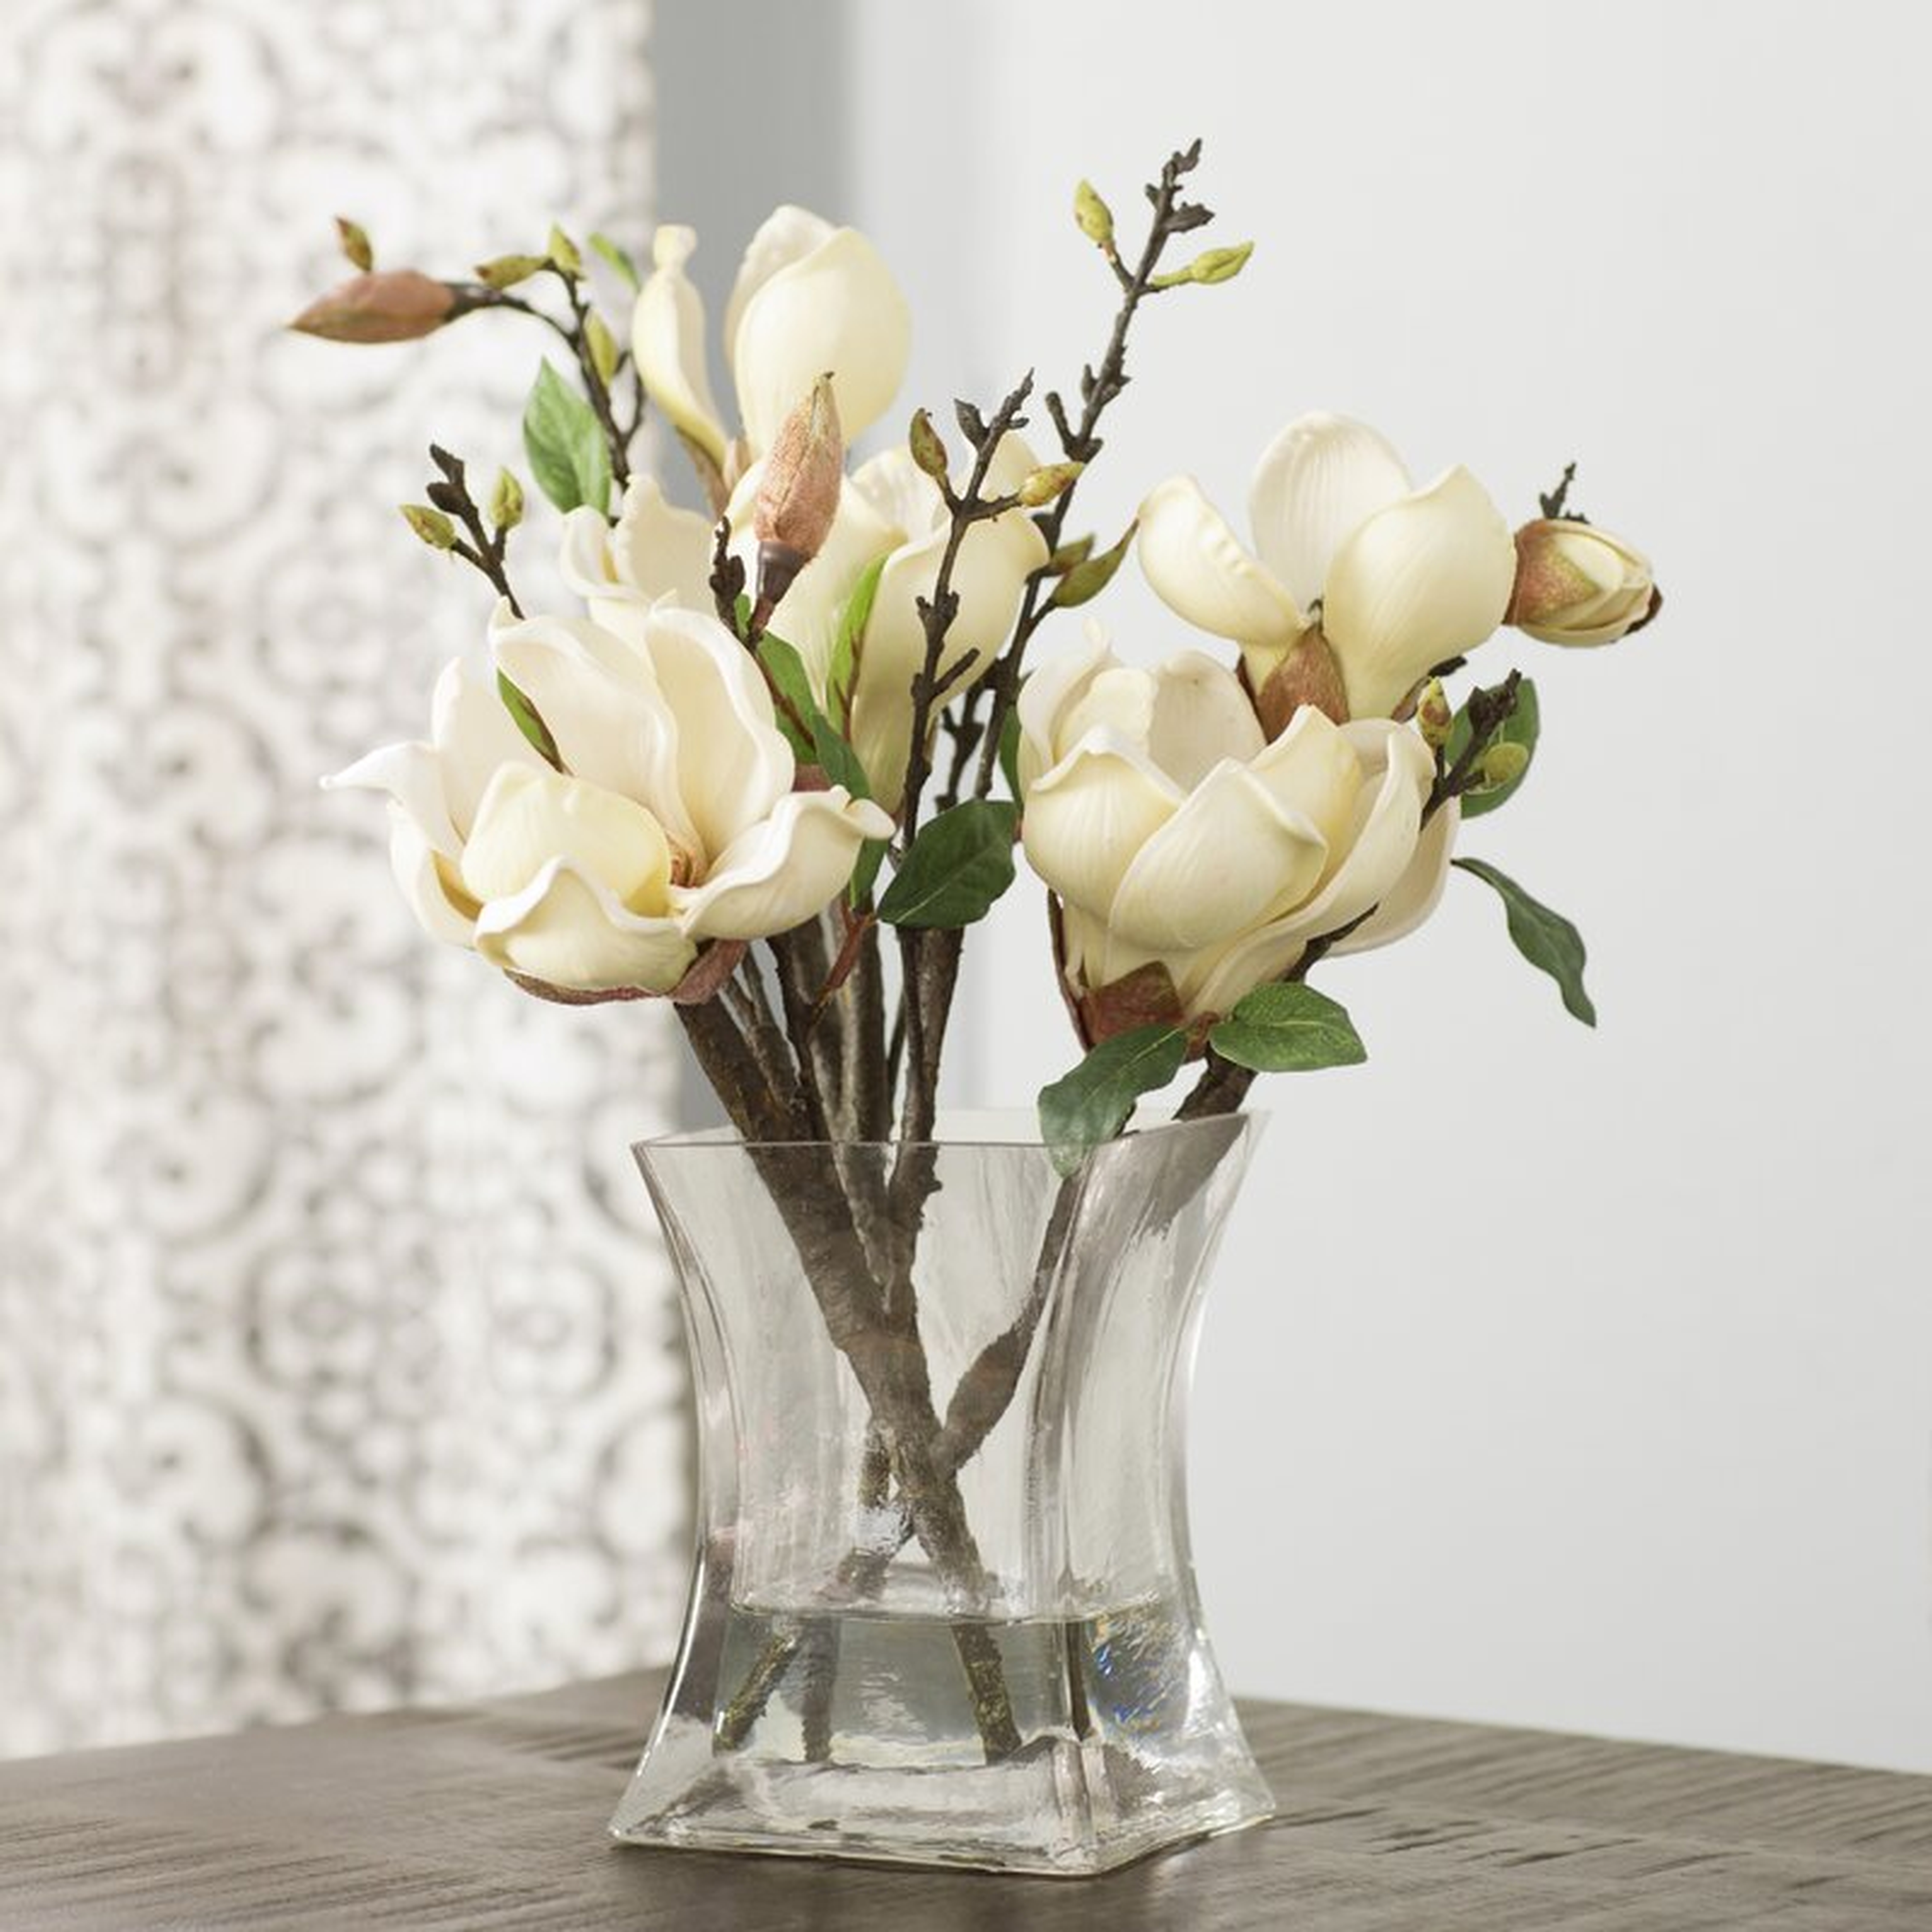 Magnolia Centerpiece in Vase - Wayfair